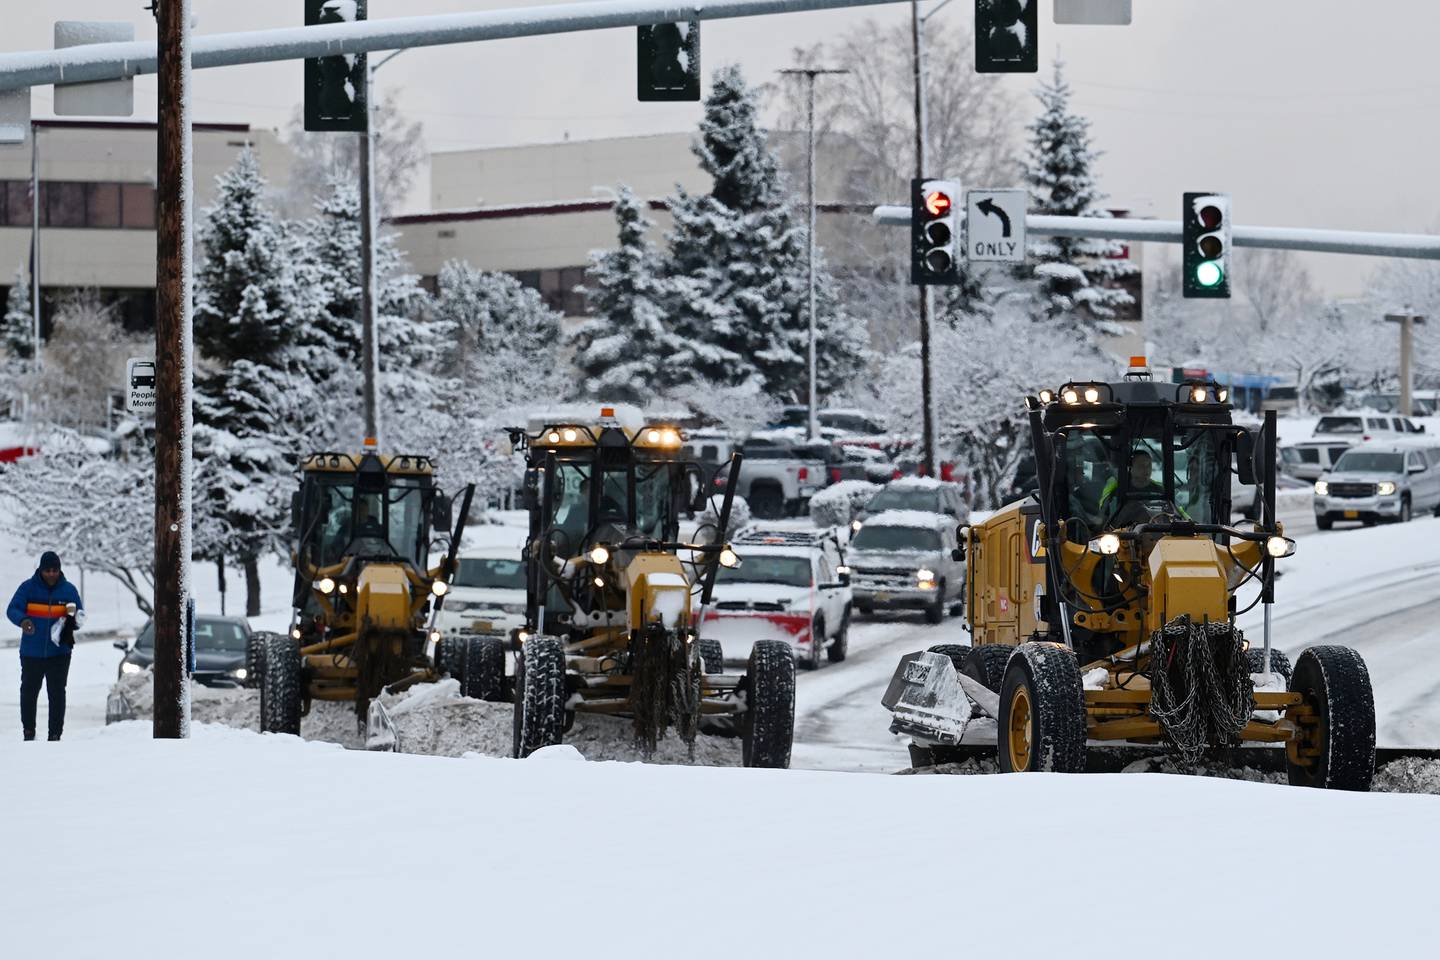 City graders remove snow